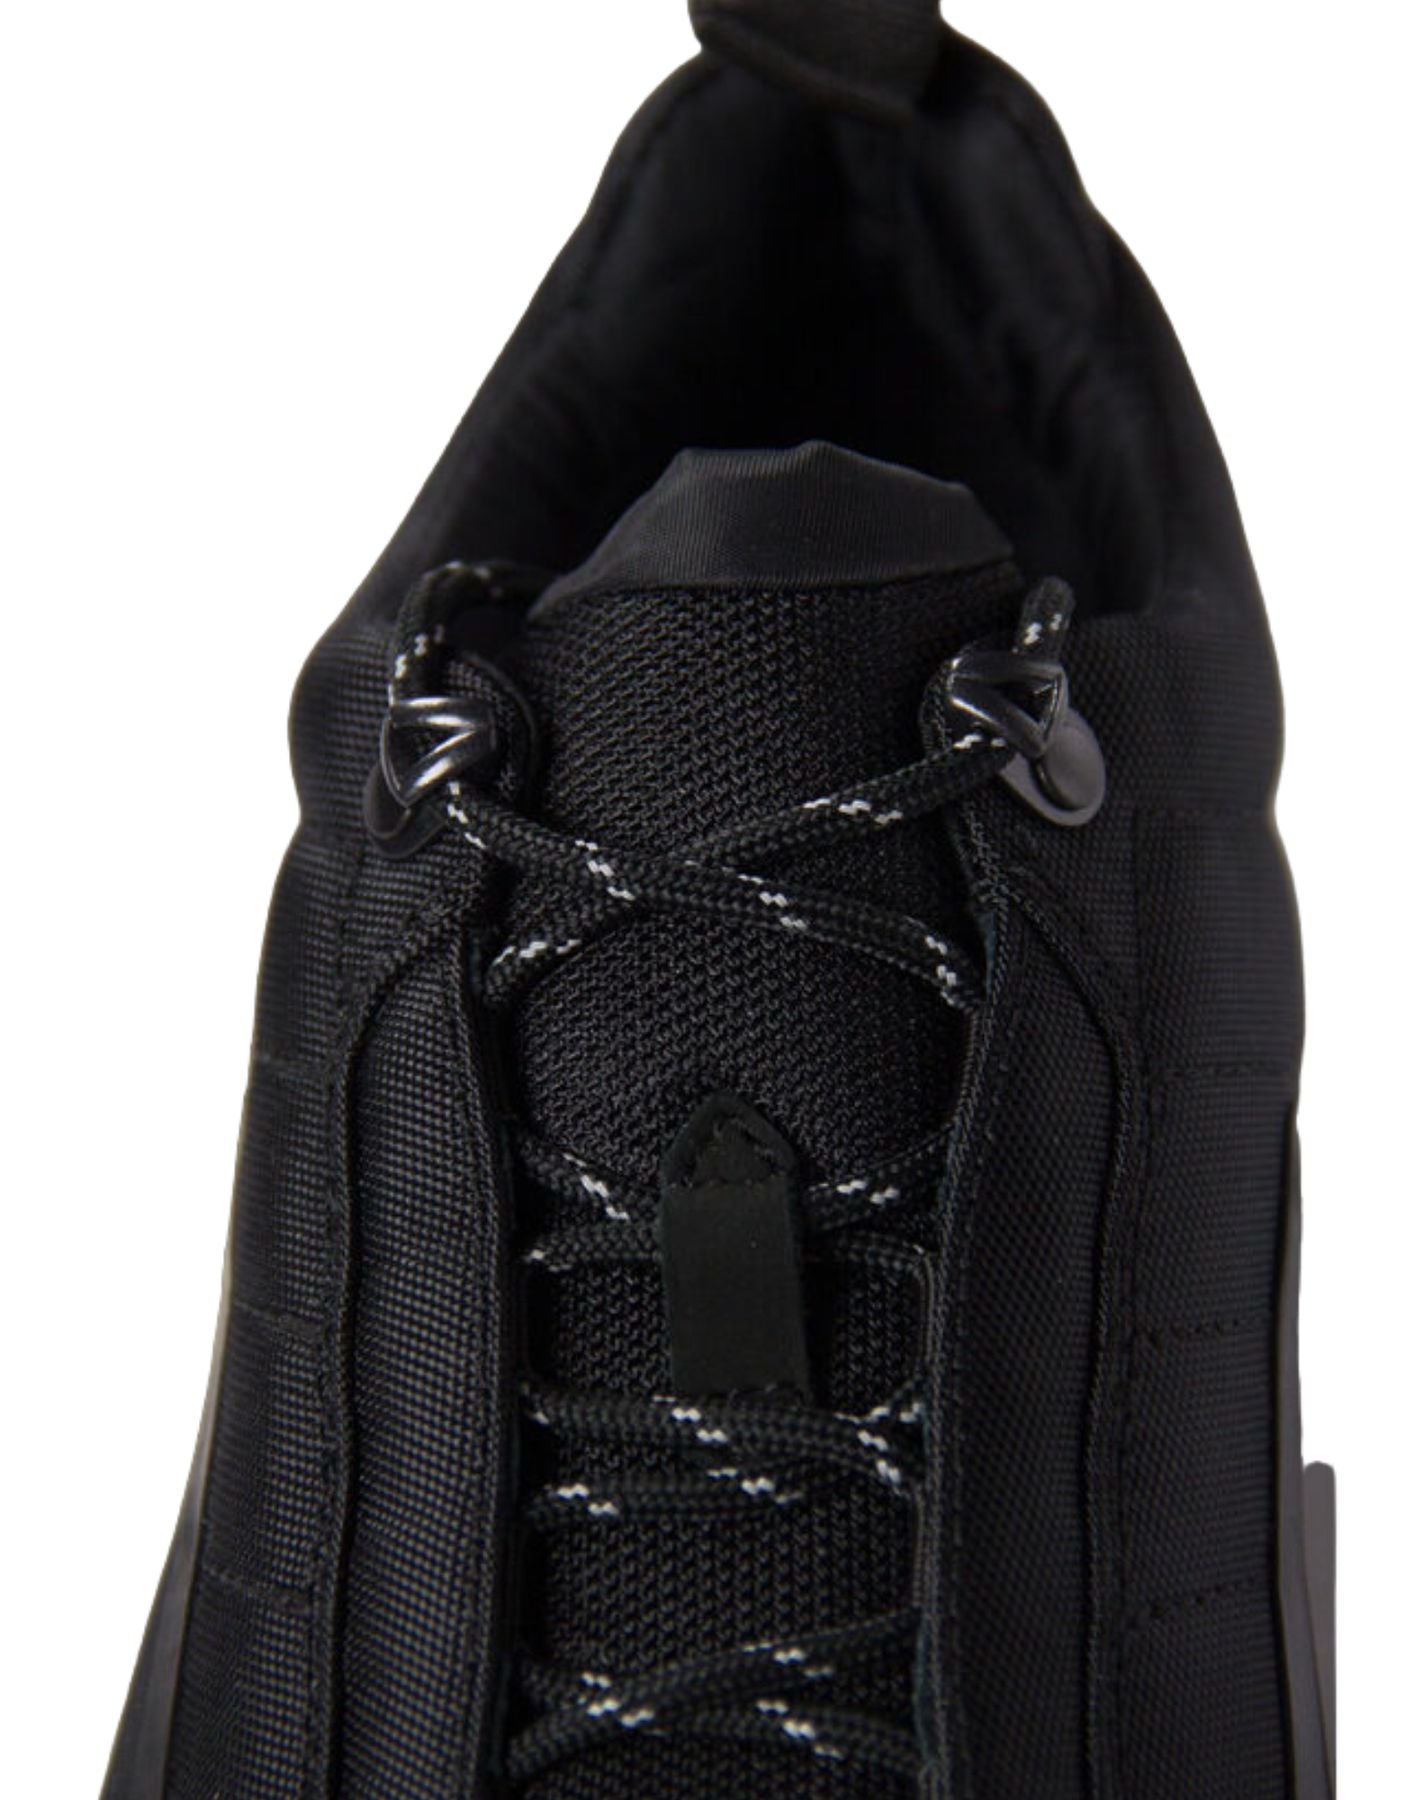 Schuhe Mann KFA10 001 Black ROA